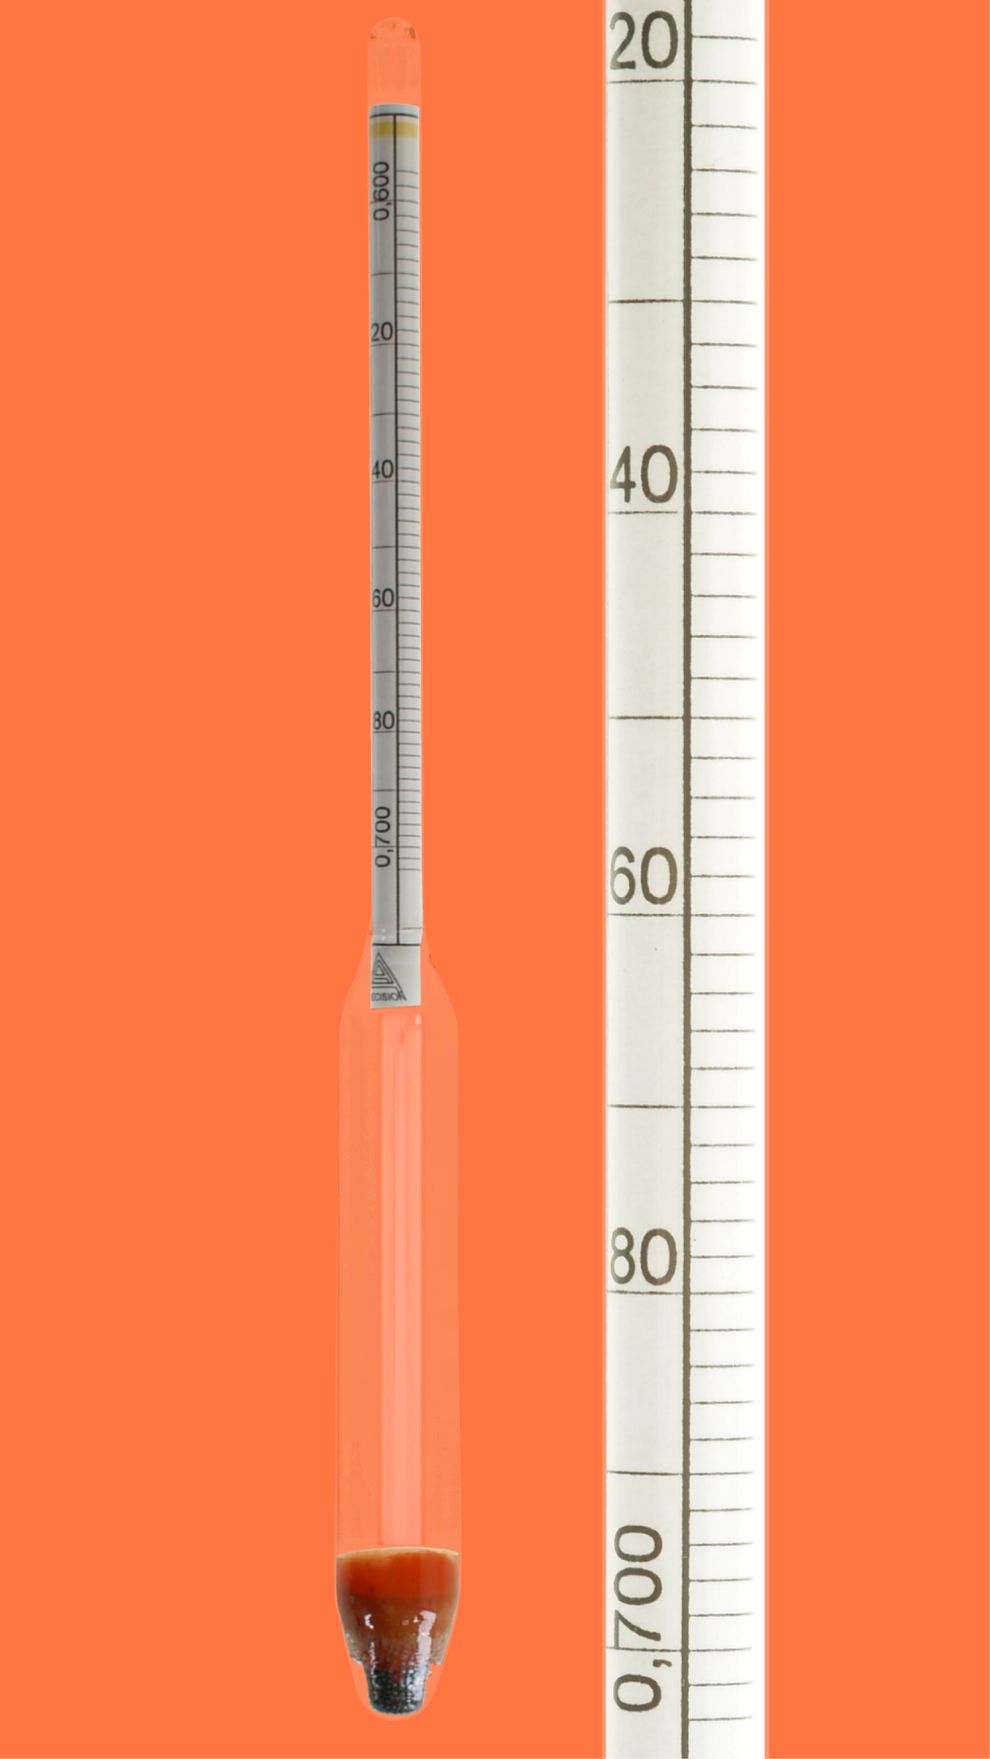 Aräometer, DIN 12791, M100, 1,00-1,10:0,0020g/cm³, Bezugstemp. 20°C, ohne Thermometer